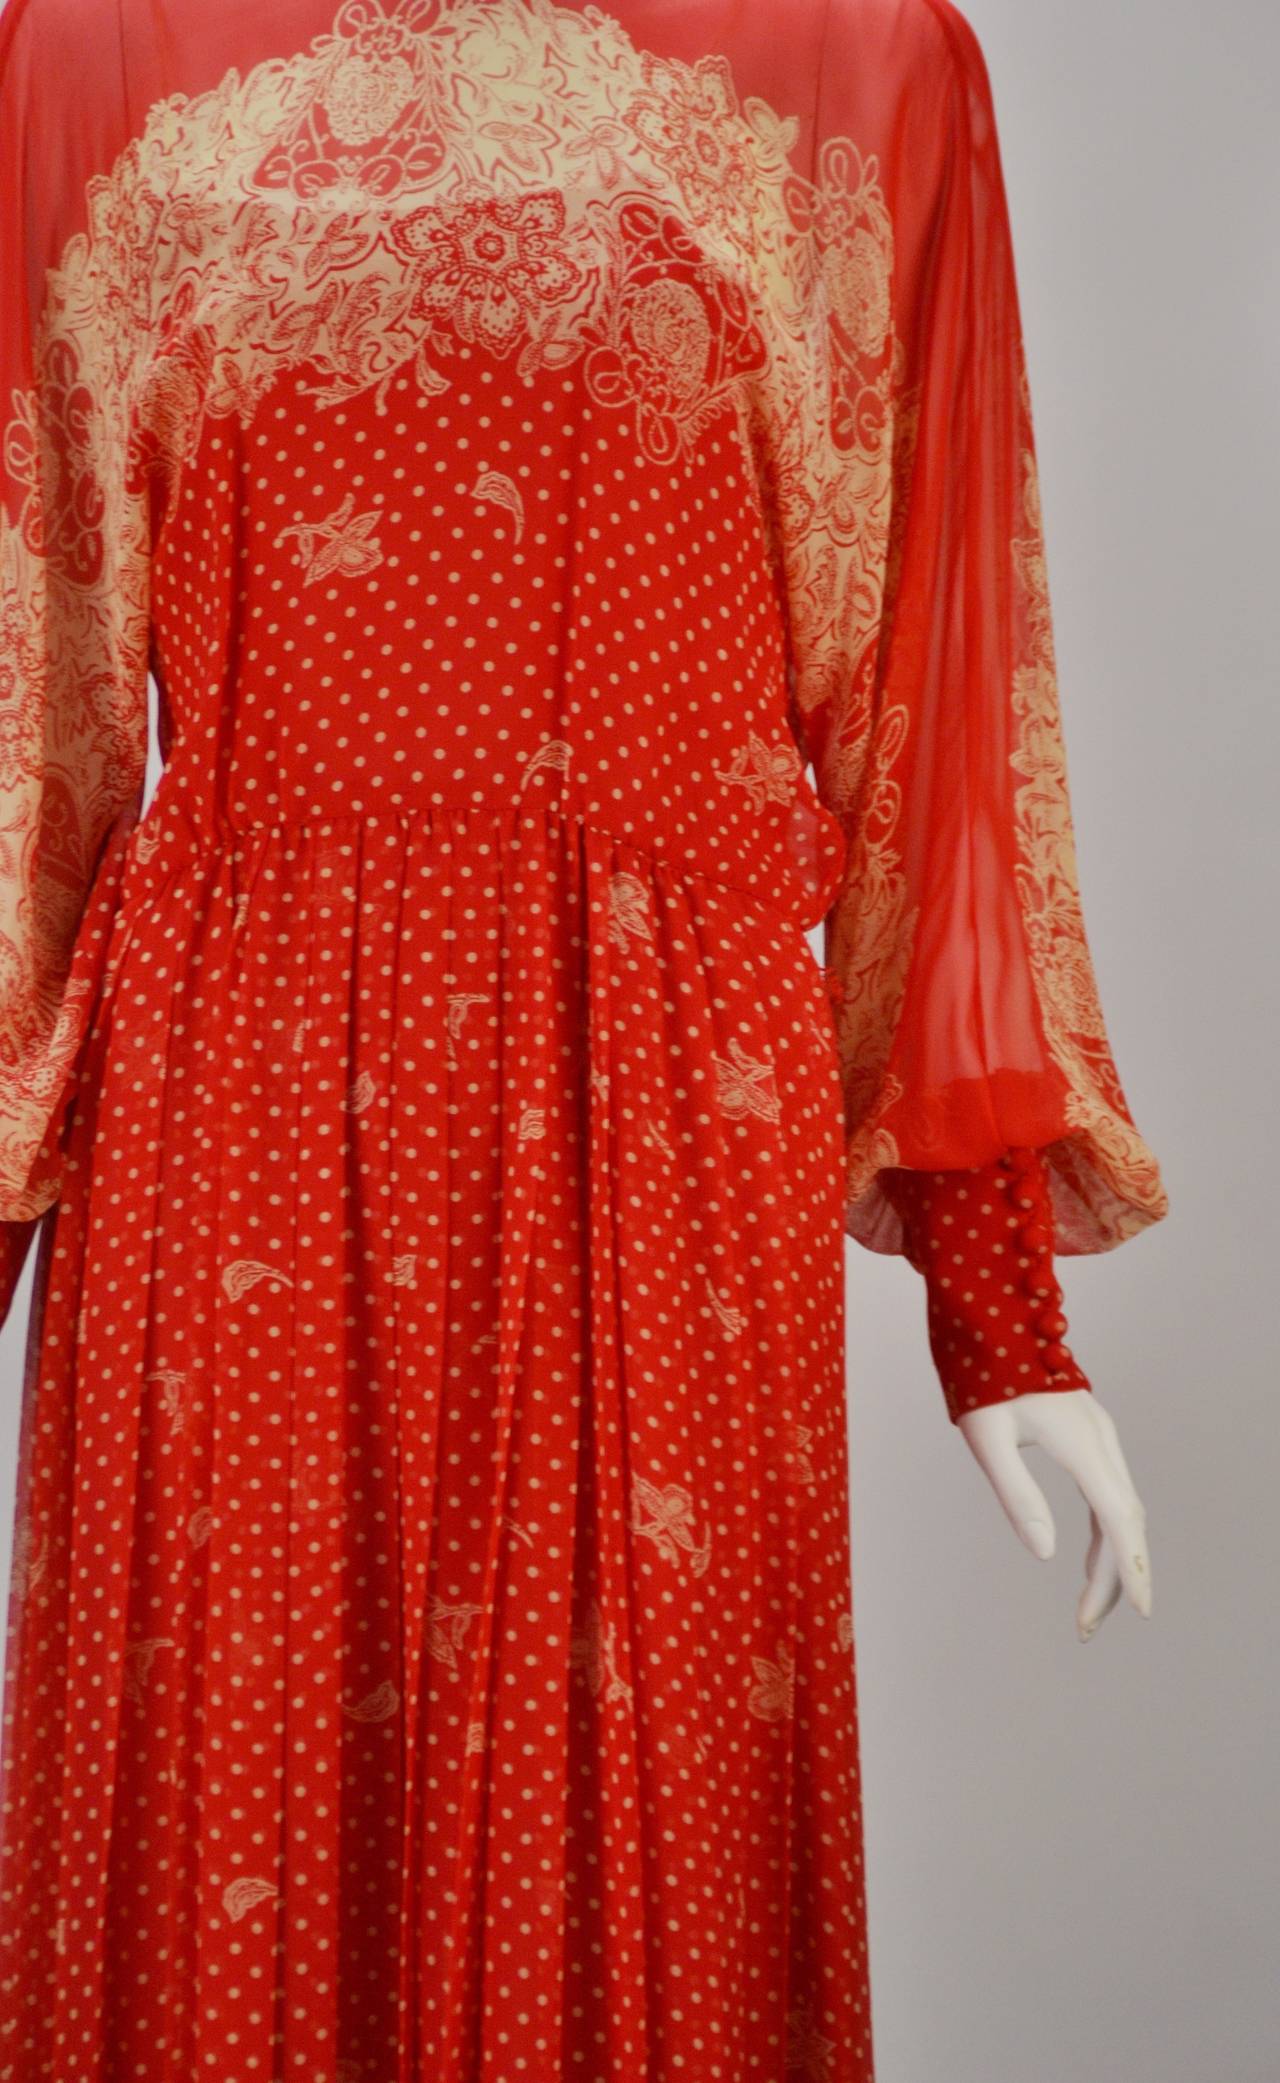 Women's 1980's Adele Simpson Red Silk Floral Print Dress